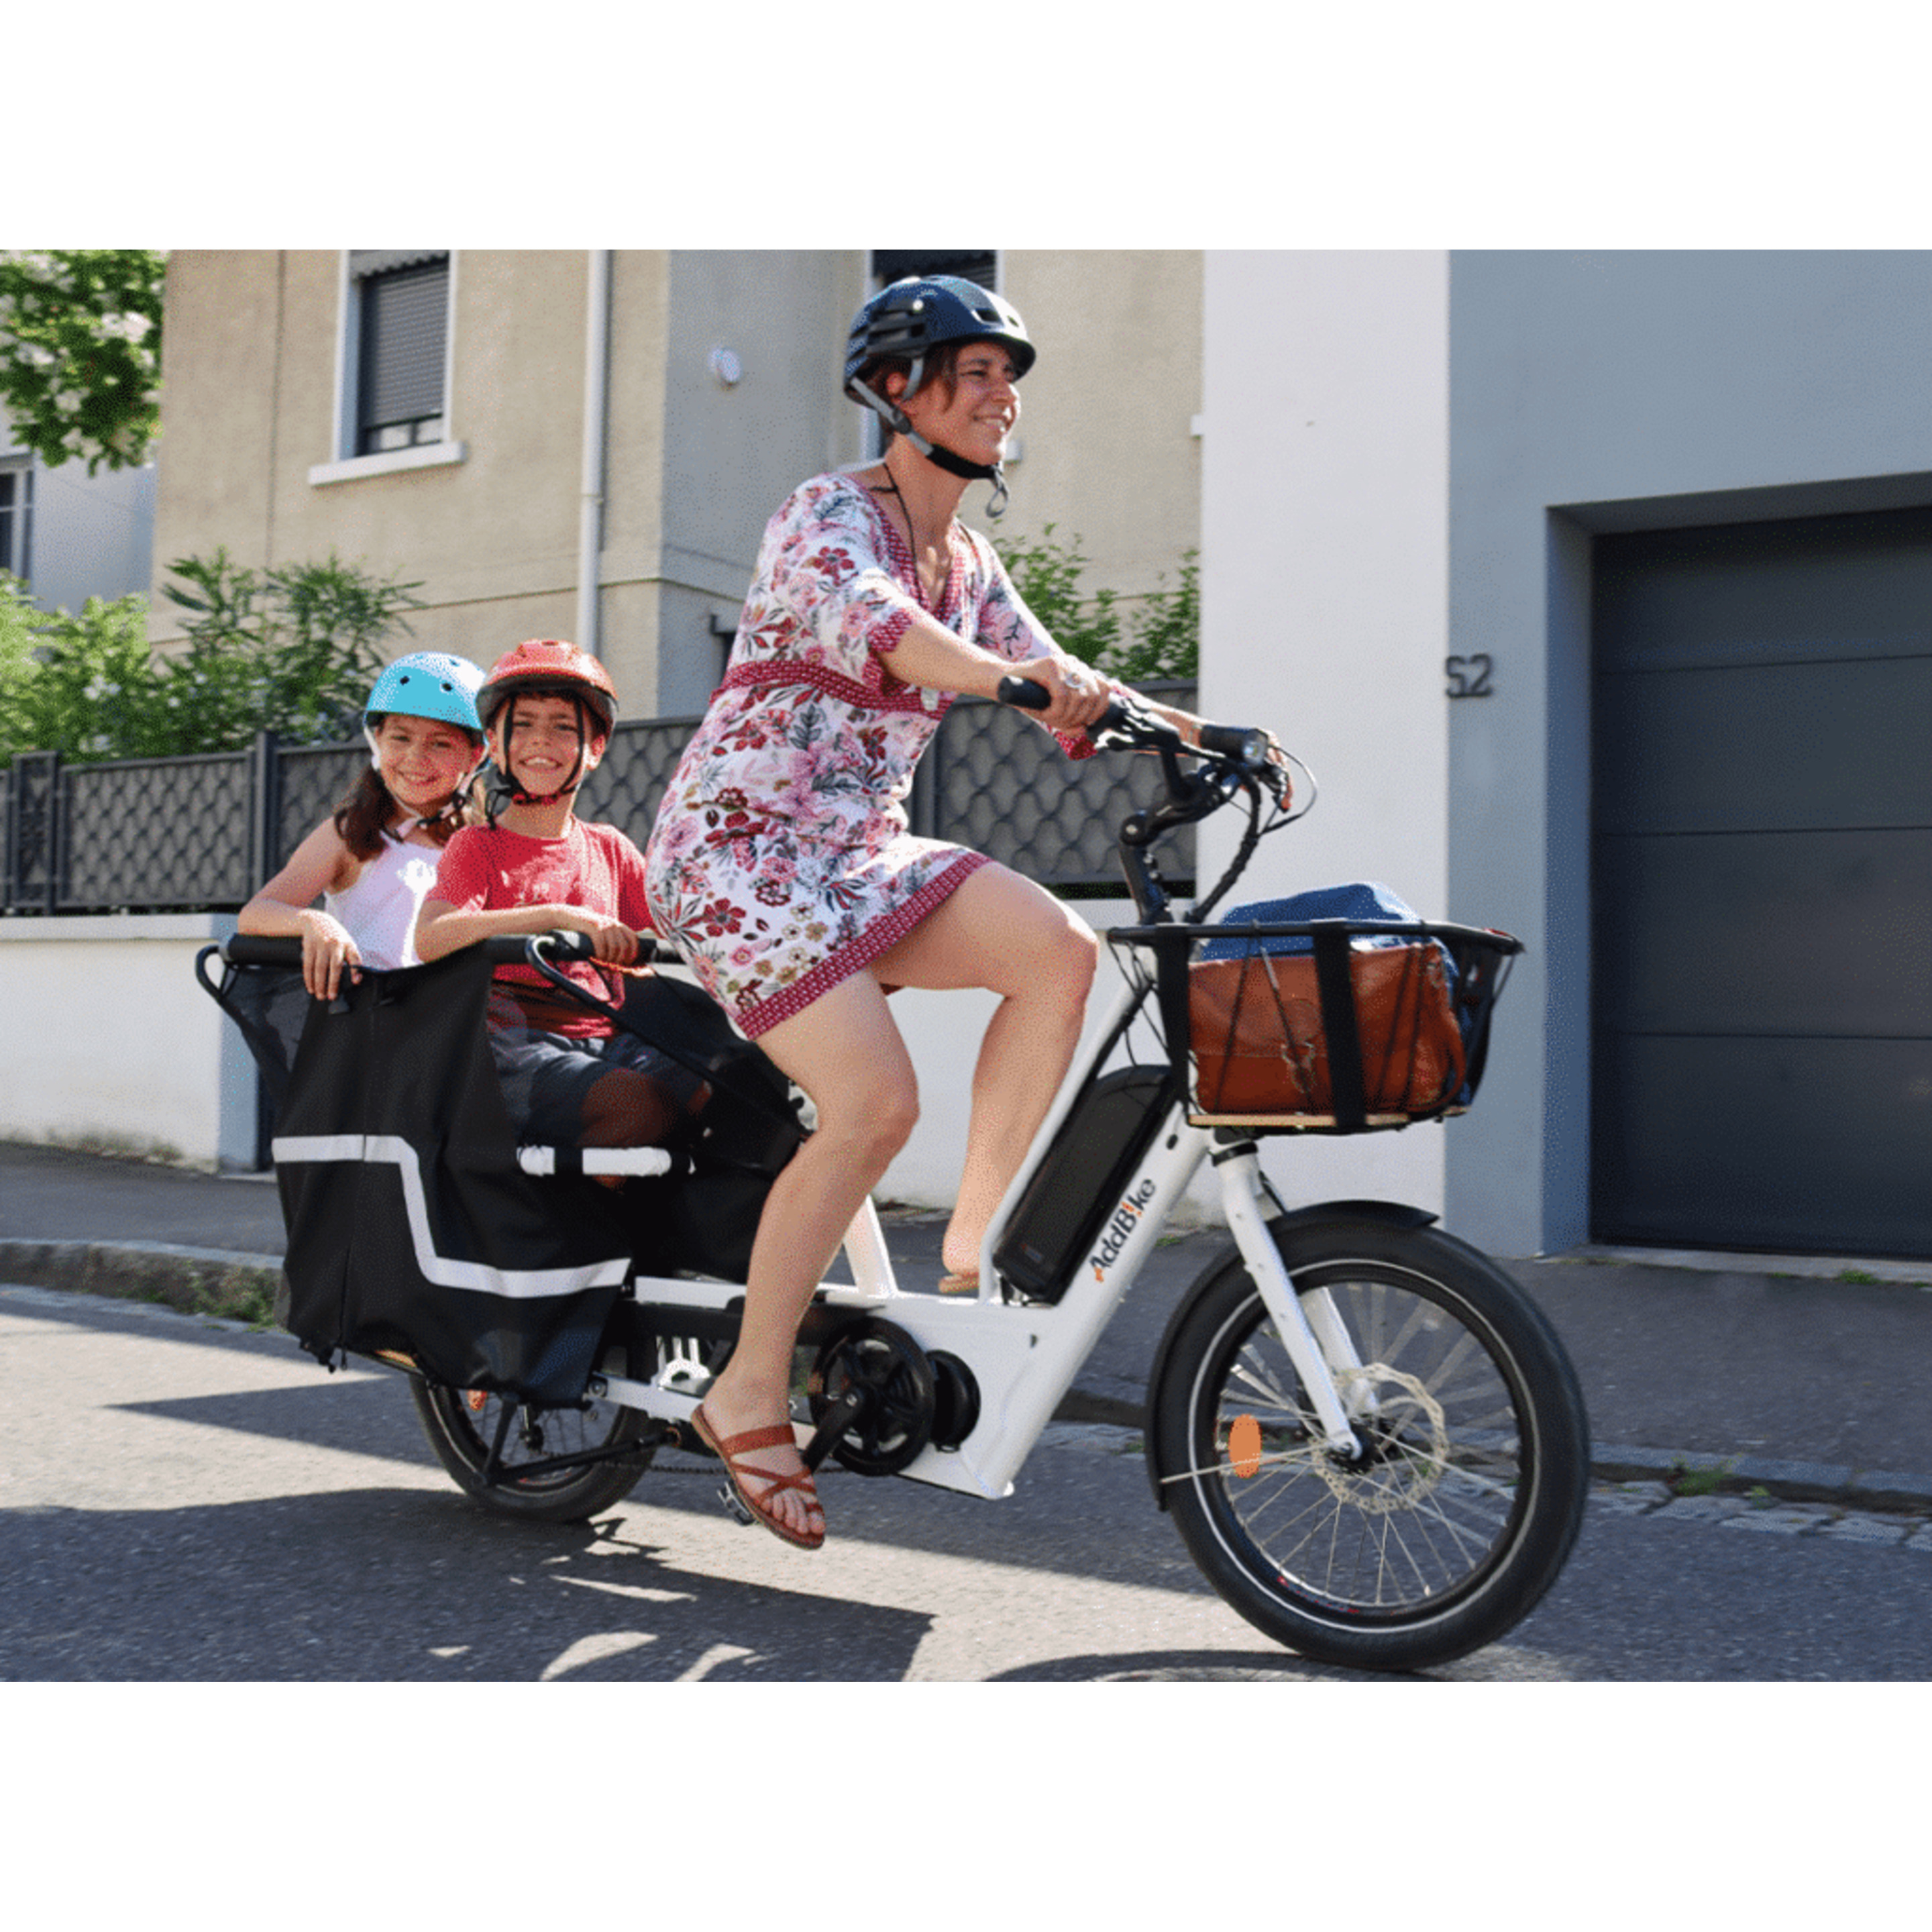 Bicicleta Carga Eléctrica Familiar Addbike U-cargo Family